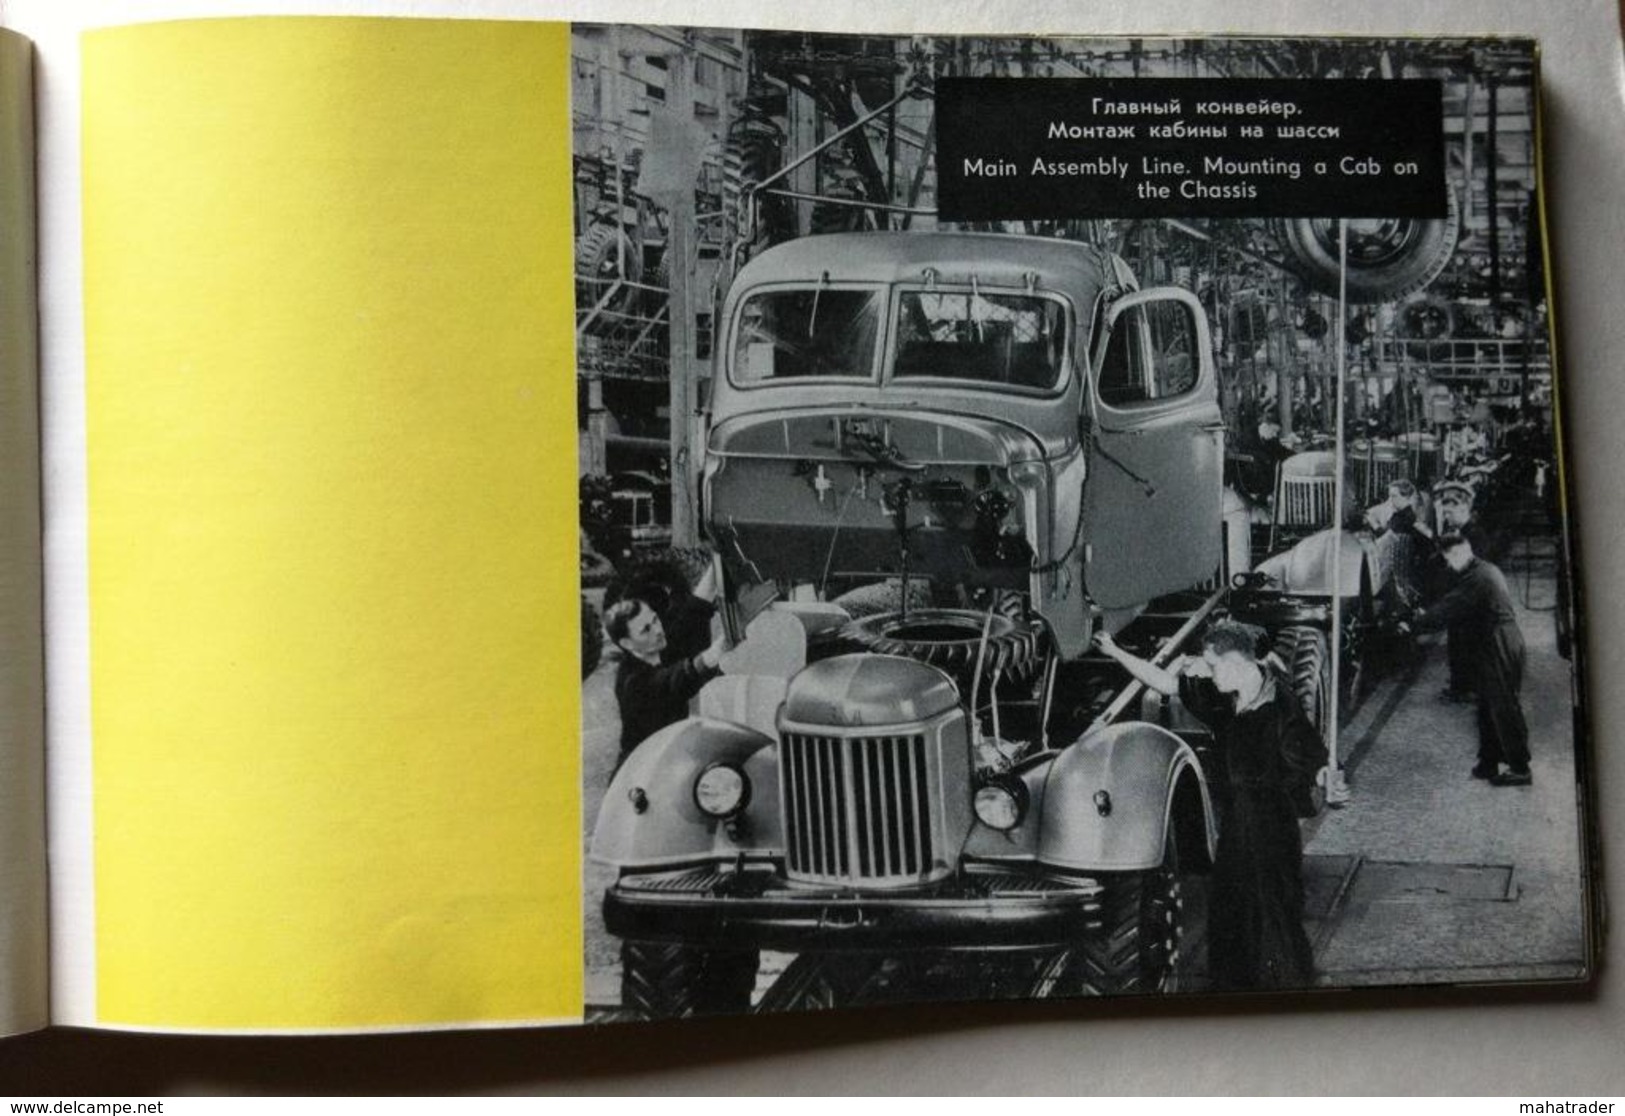 Likhachev ZiL Moscow Automotive Plant booklet 1961 - over 70 pages - 19x12cm